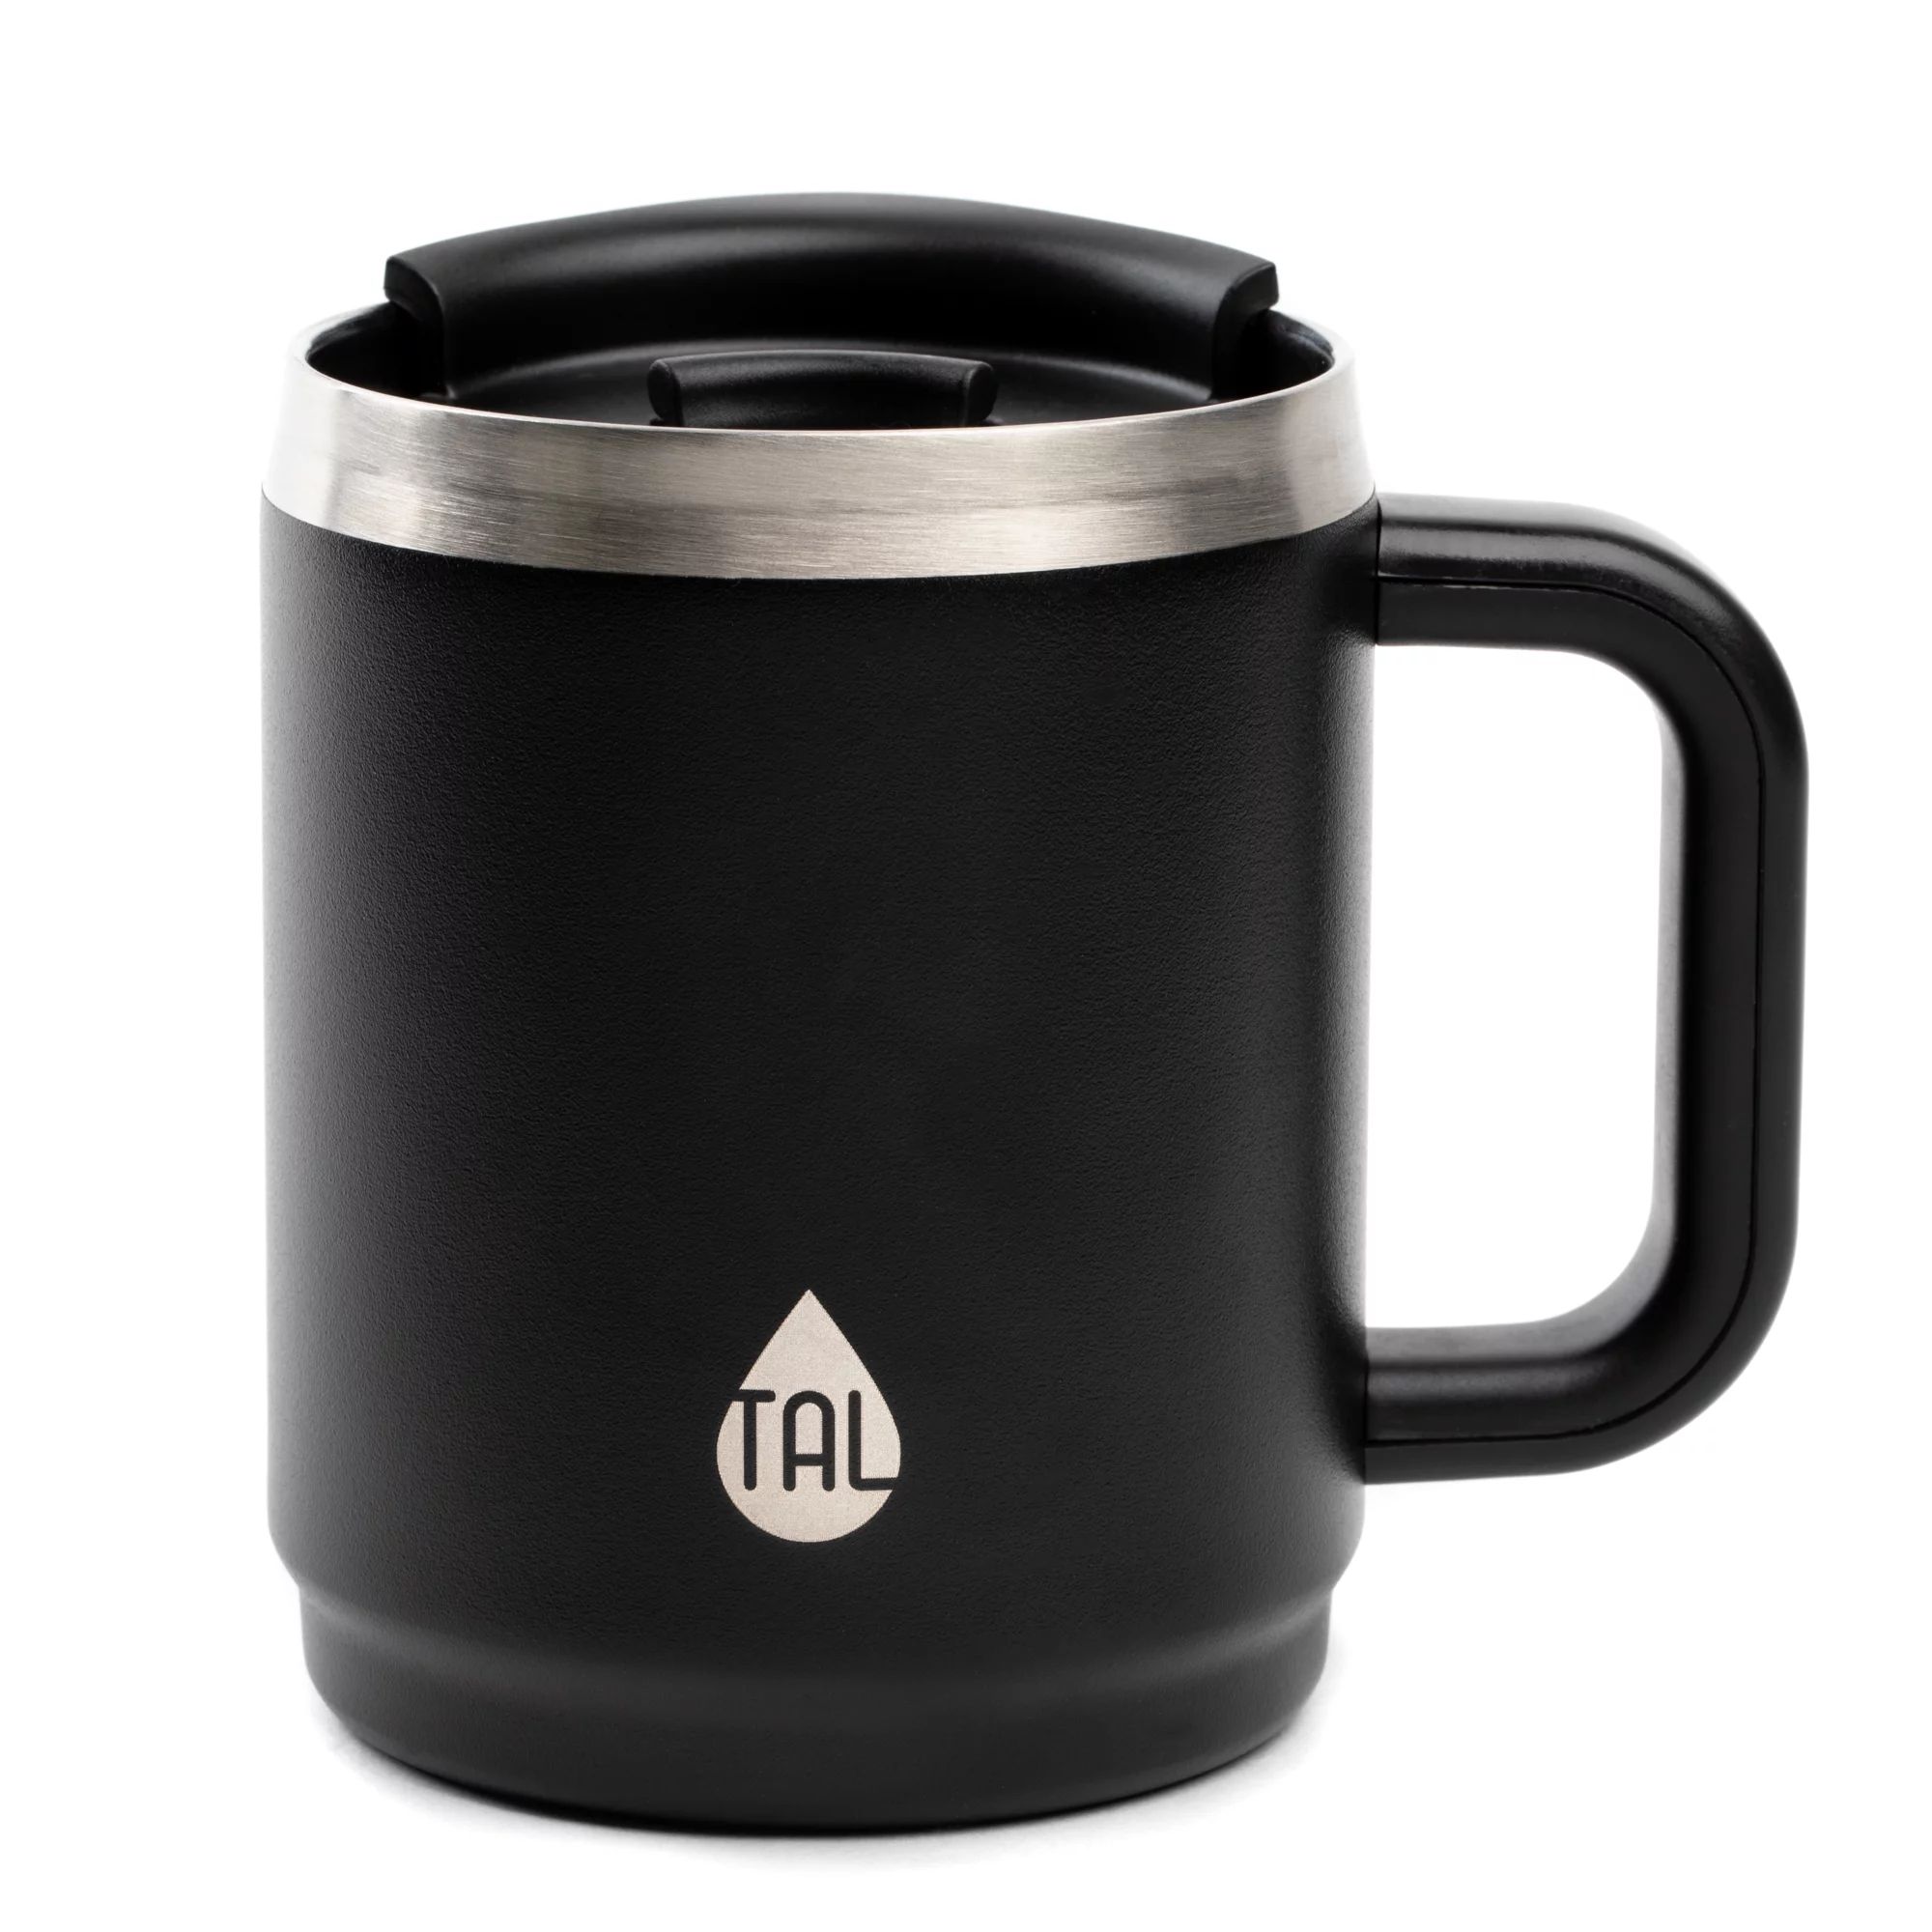 TAL Stainless Steel Boulder Coffee Mug 14oz, Black | Walmart (US)